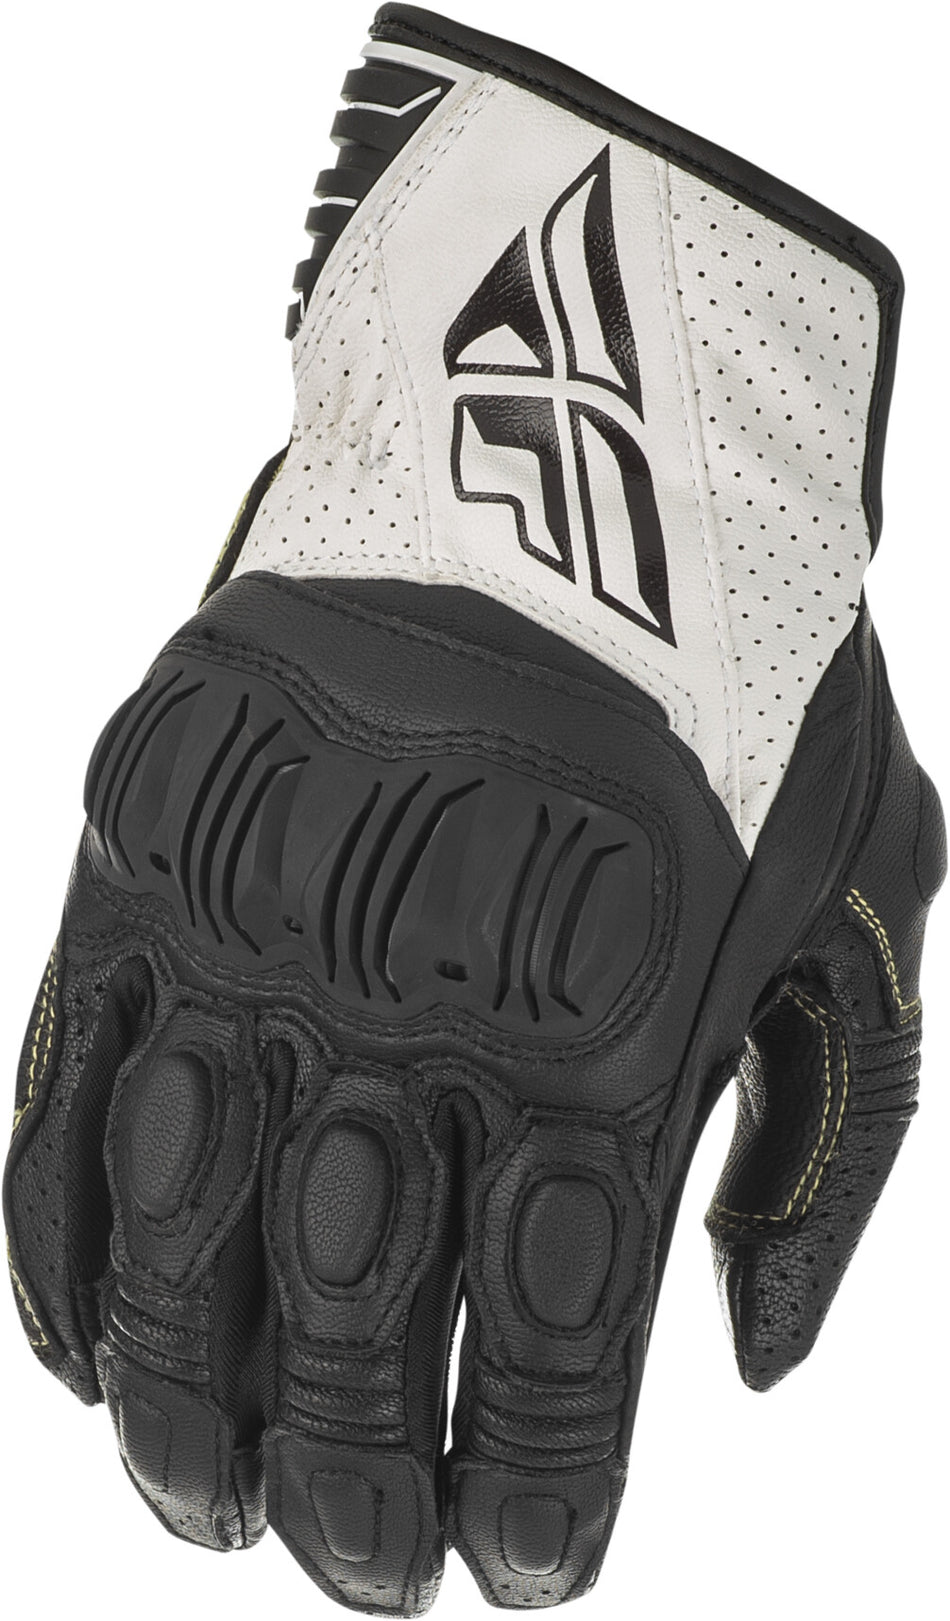 FLY RACING Brawler Gloves Black/White 2x 476-20932X